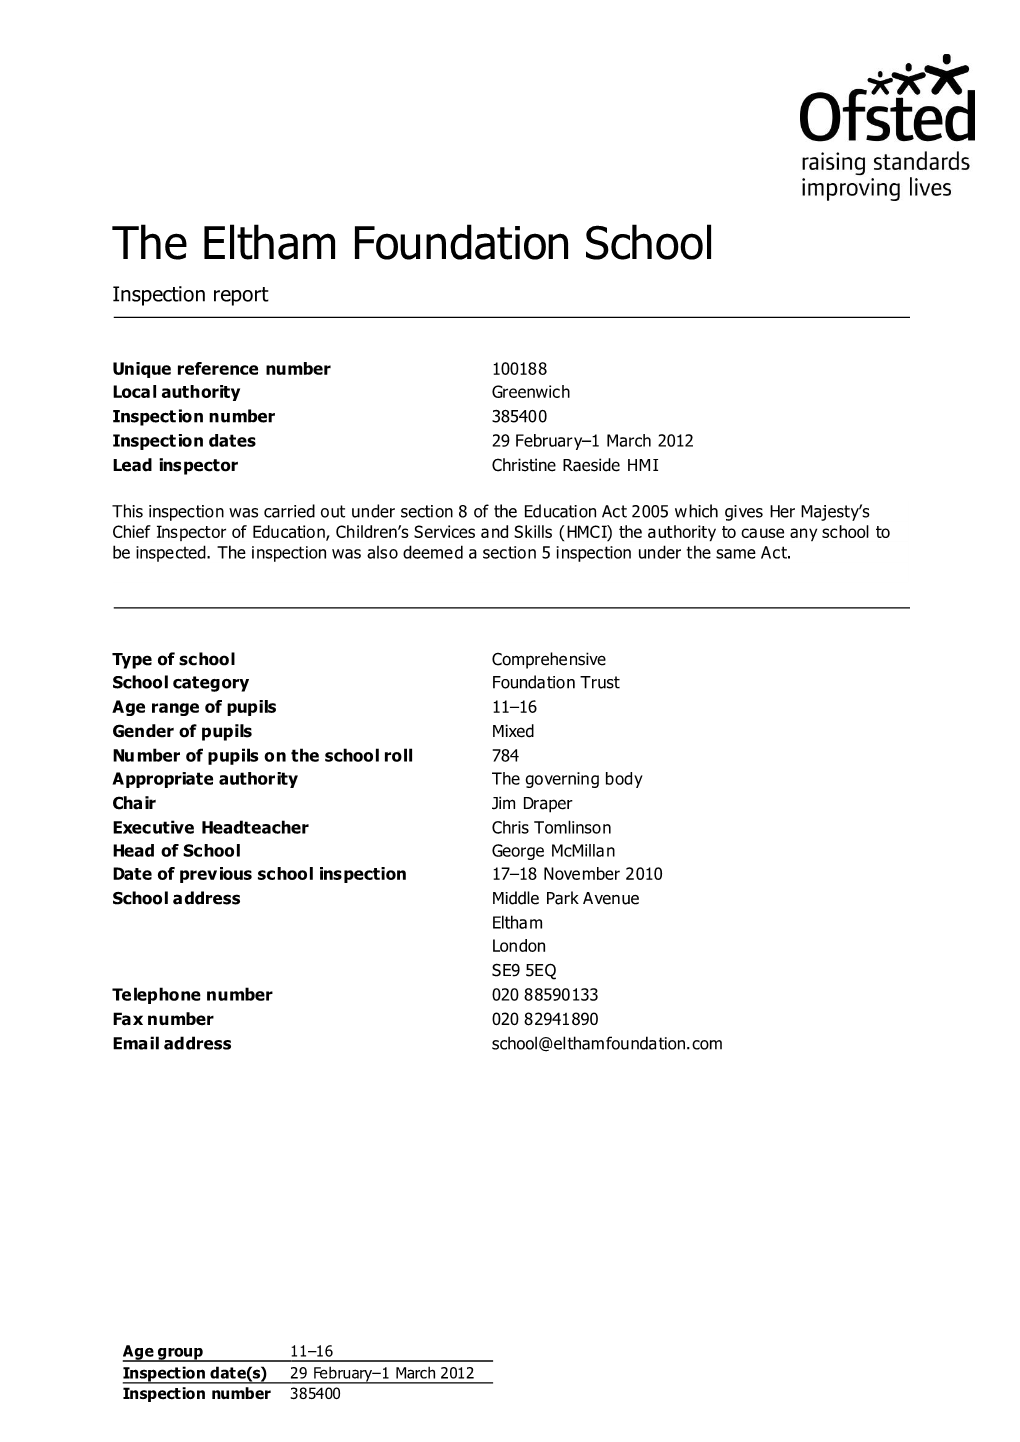 The Eltham Foundation School Inspection Report